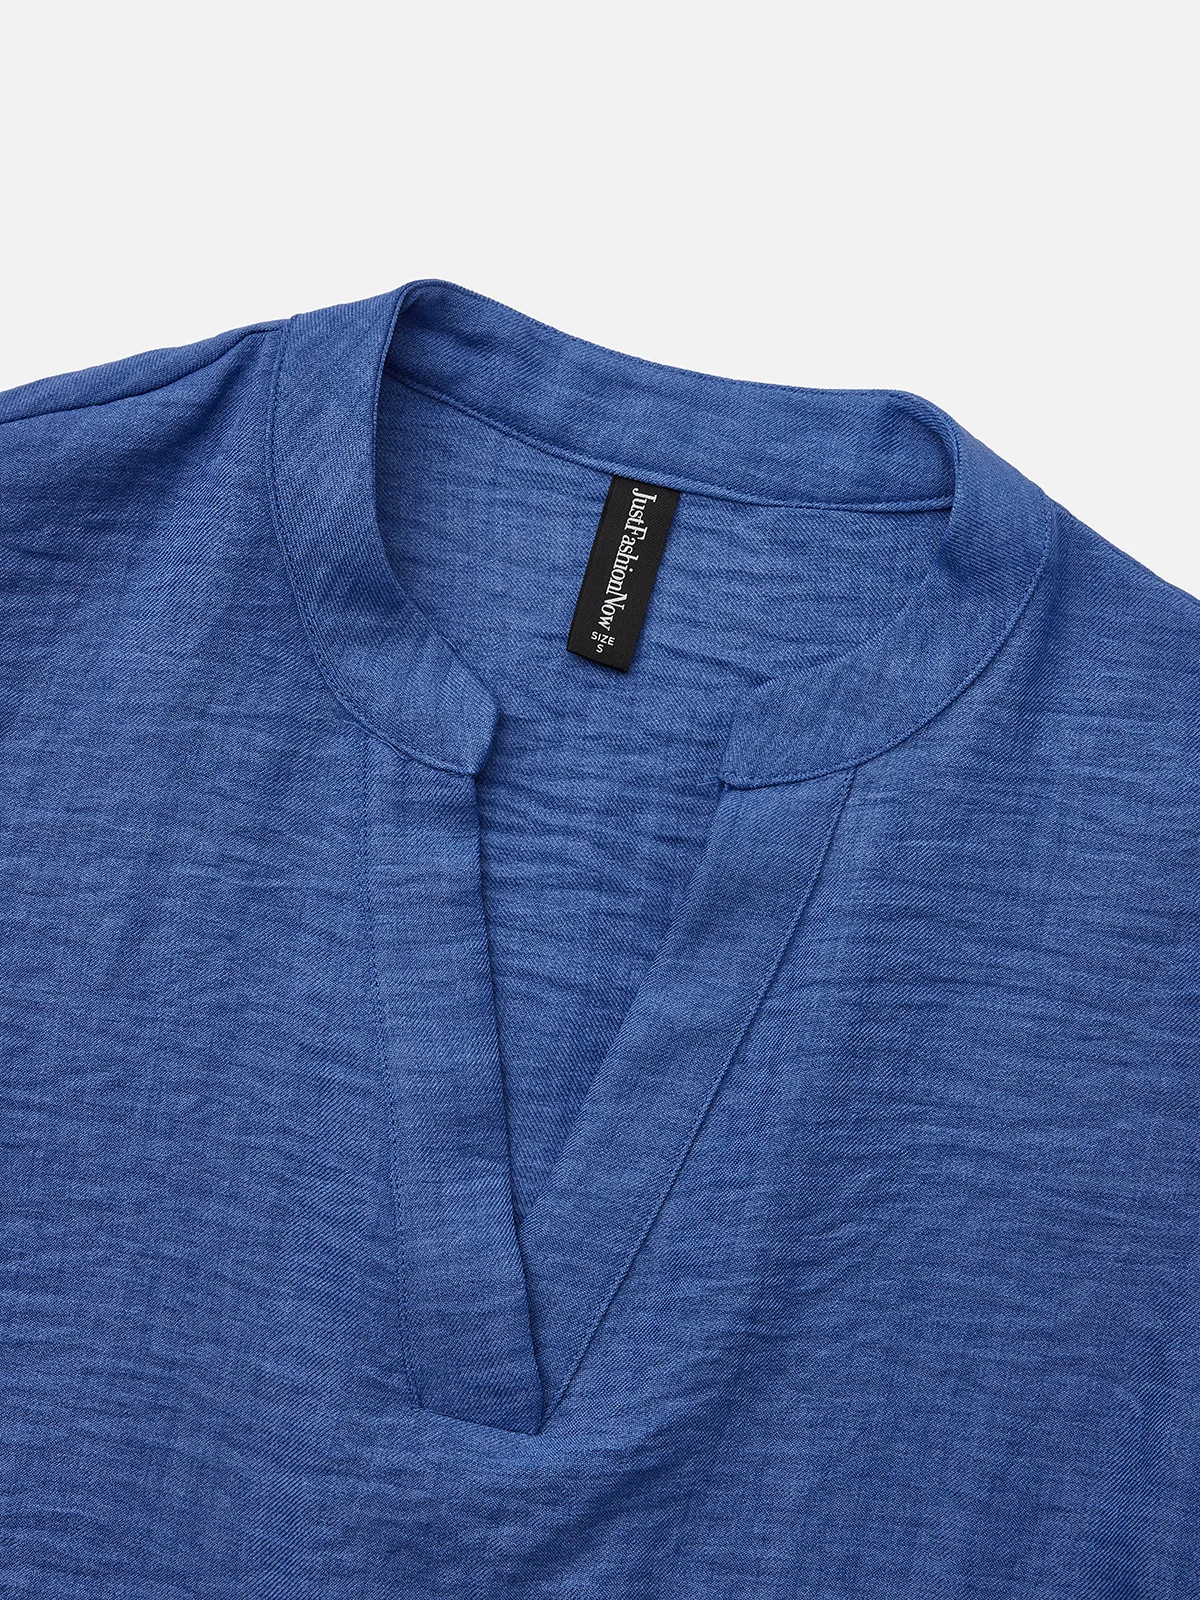 Buttoned Simple Sleeveless Regular Cotton and linen Shirts